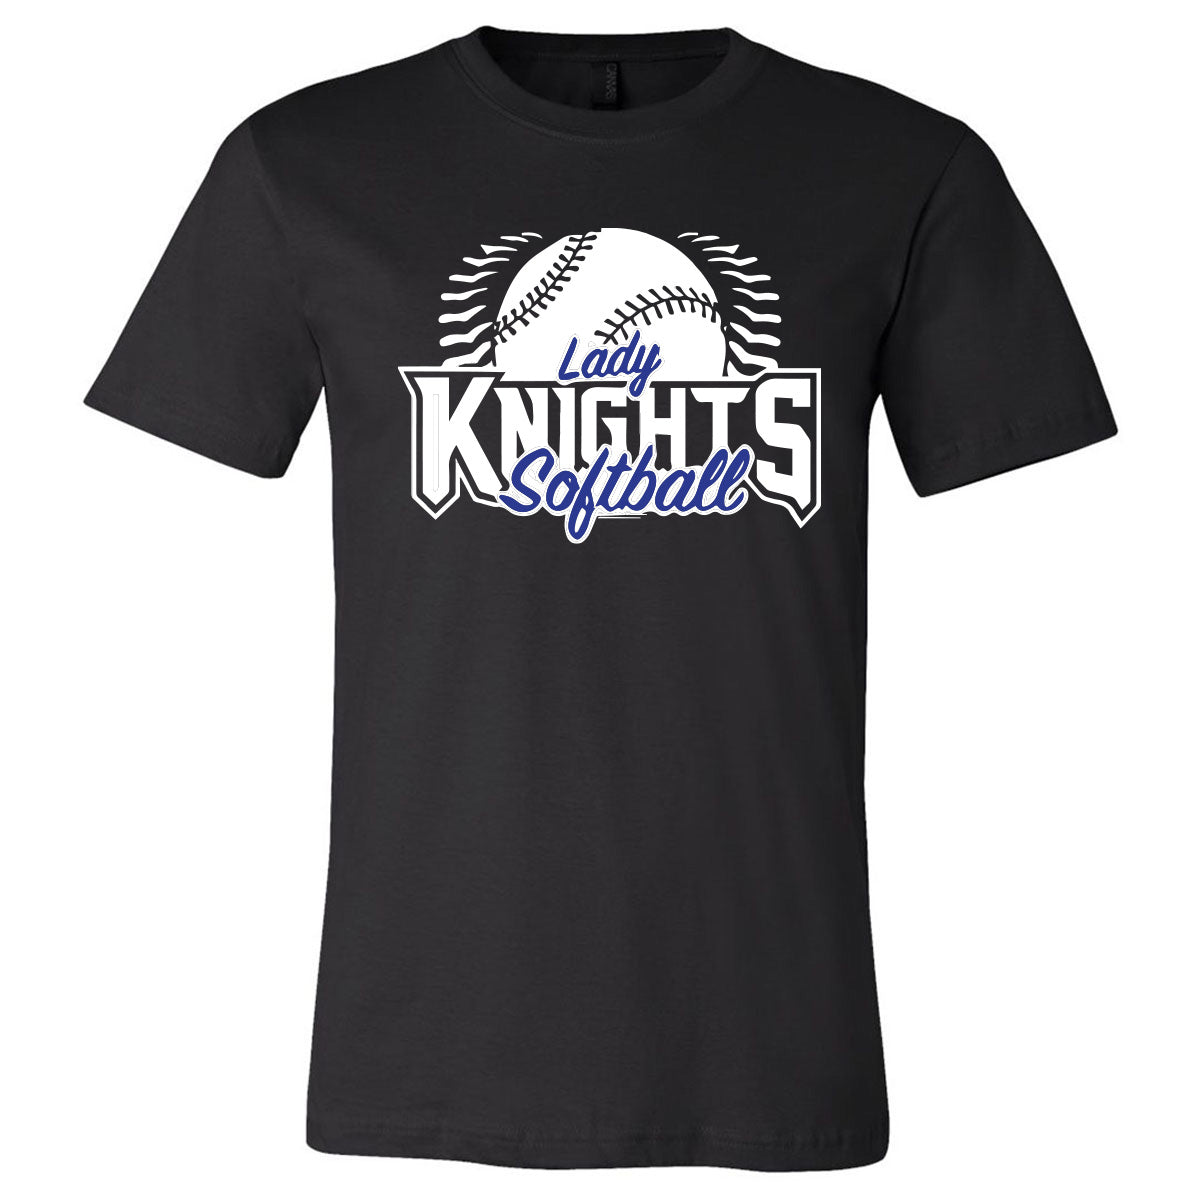 Windsor - Lady Knights Softball Seams - Black (Tee/DriFit/Hoodie/Sweatshirt) - Southern Grace Creations